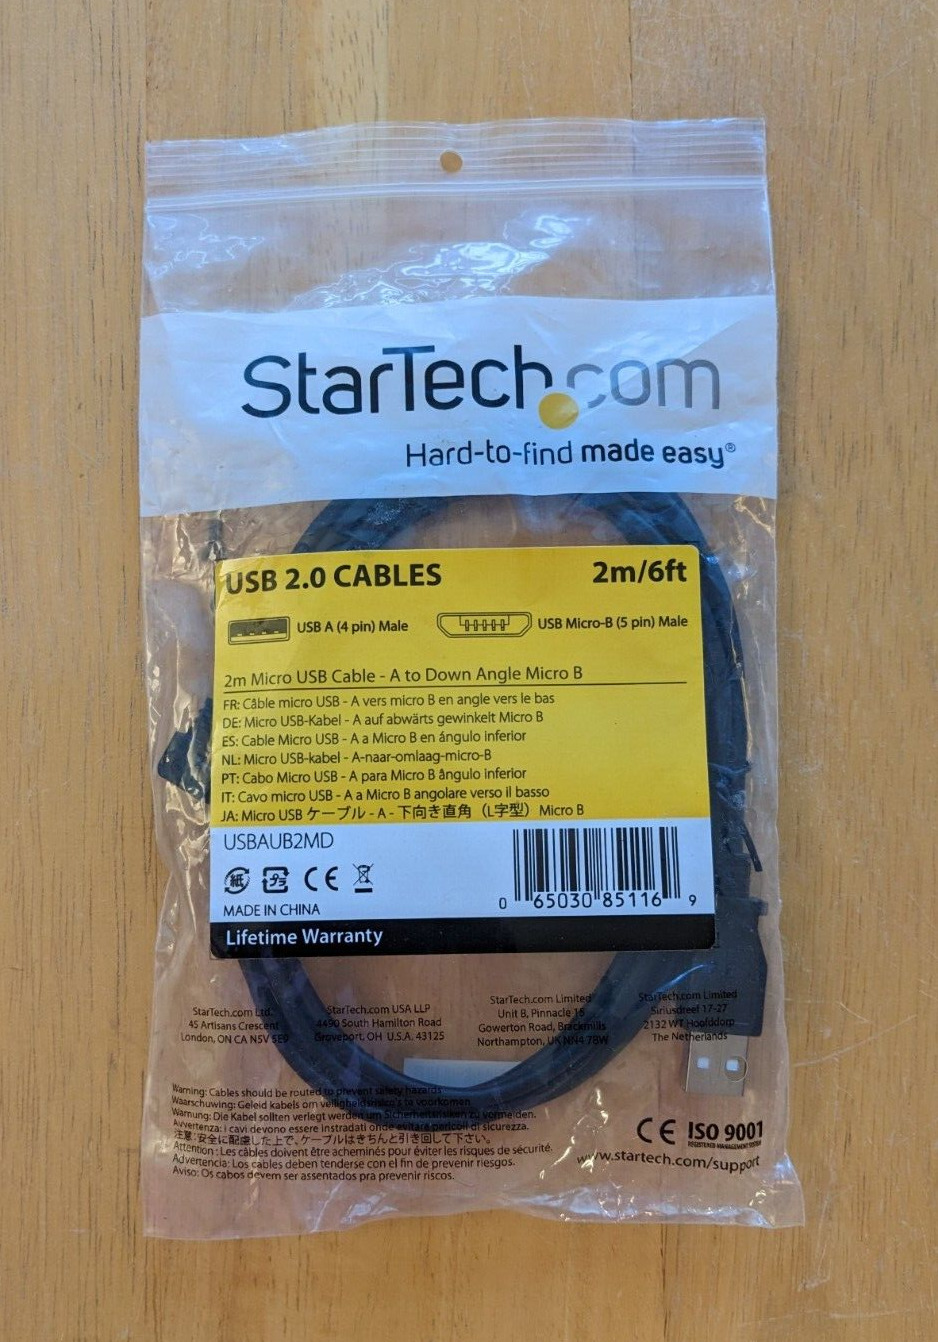 StarTech.com *2m Micro USB Cable - A to Down Angle Micro B* (USBAUB2MD, 2m/6ft)